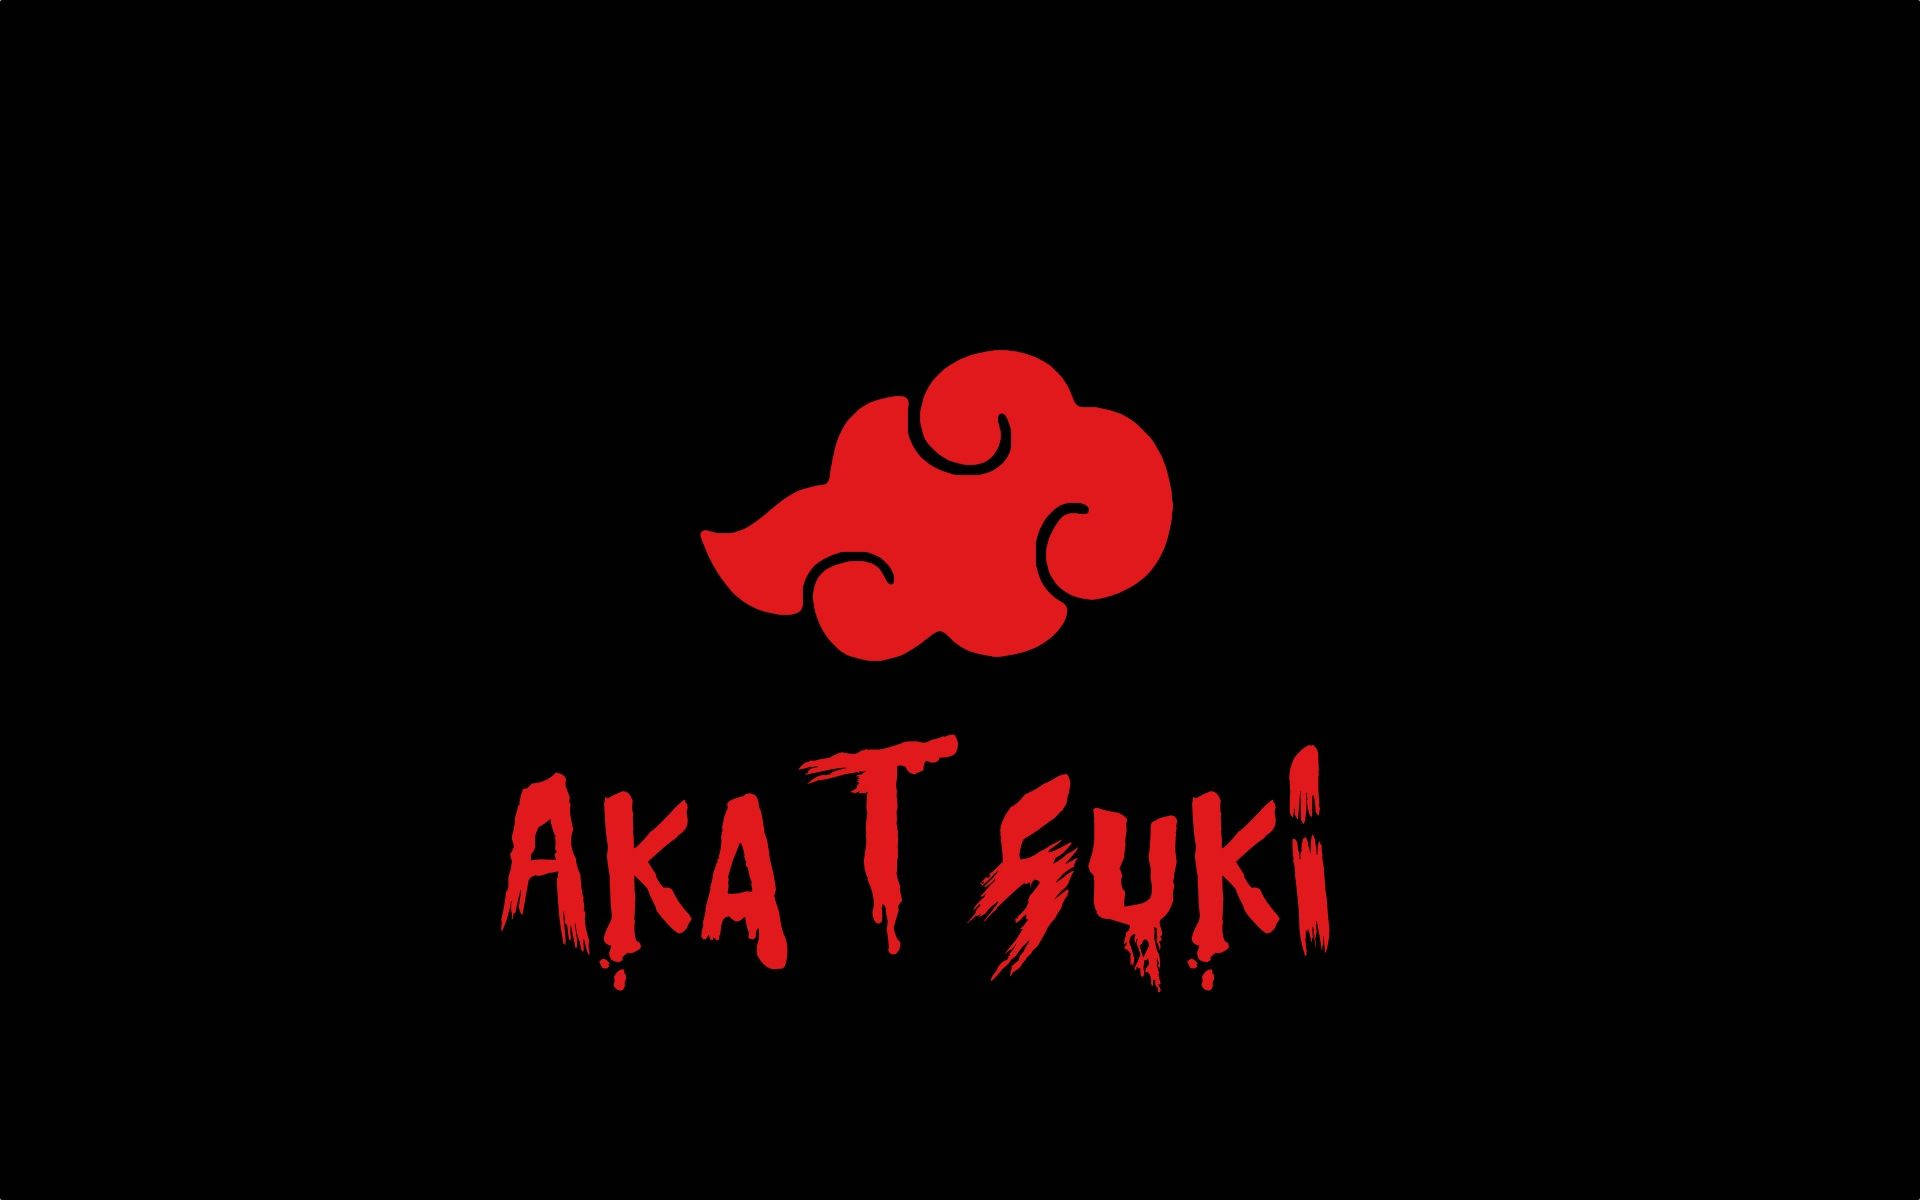 Naruto Symbol With Akatsuki Background